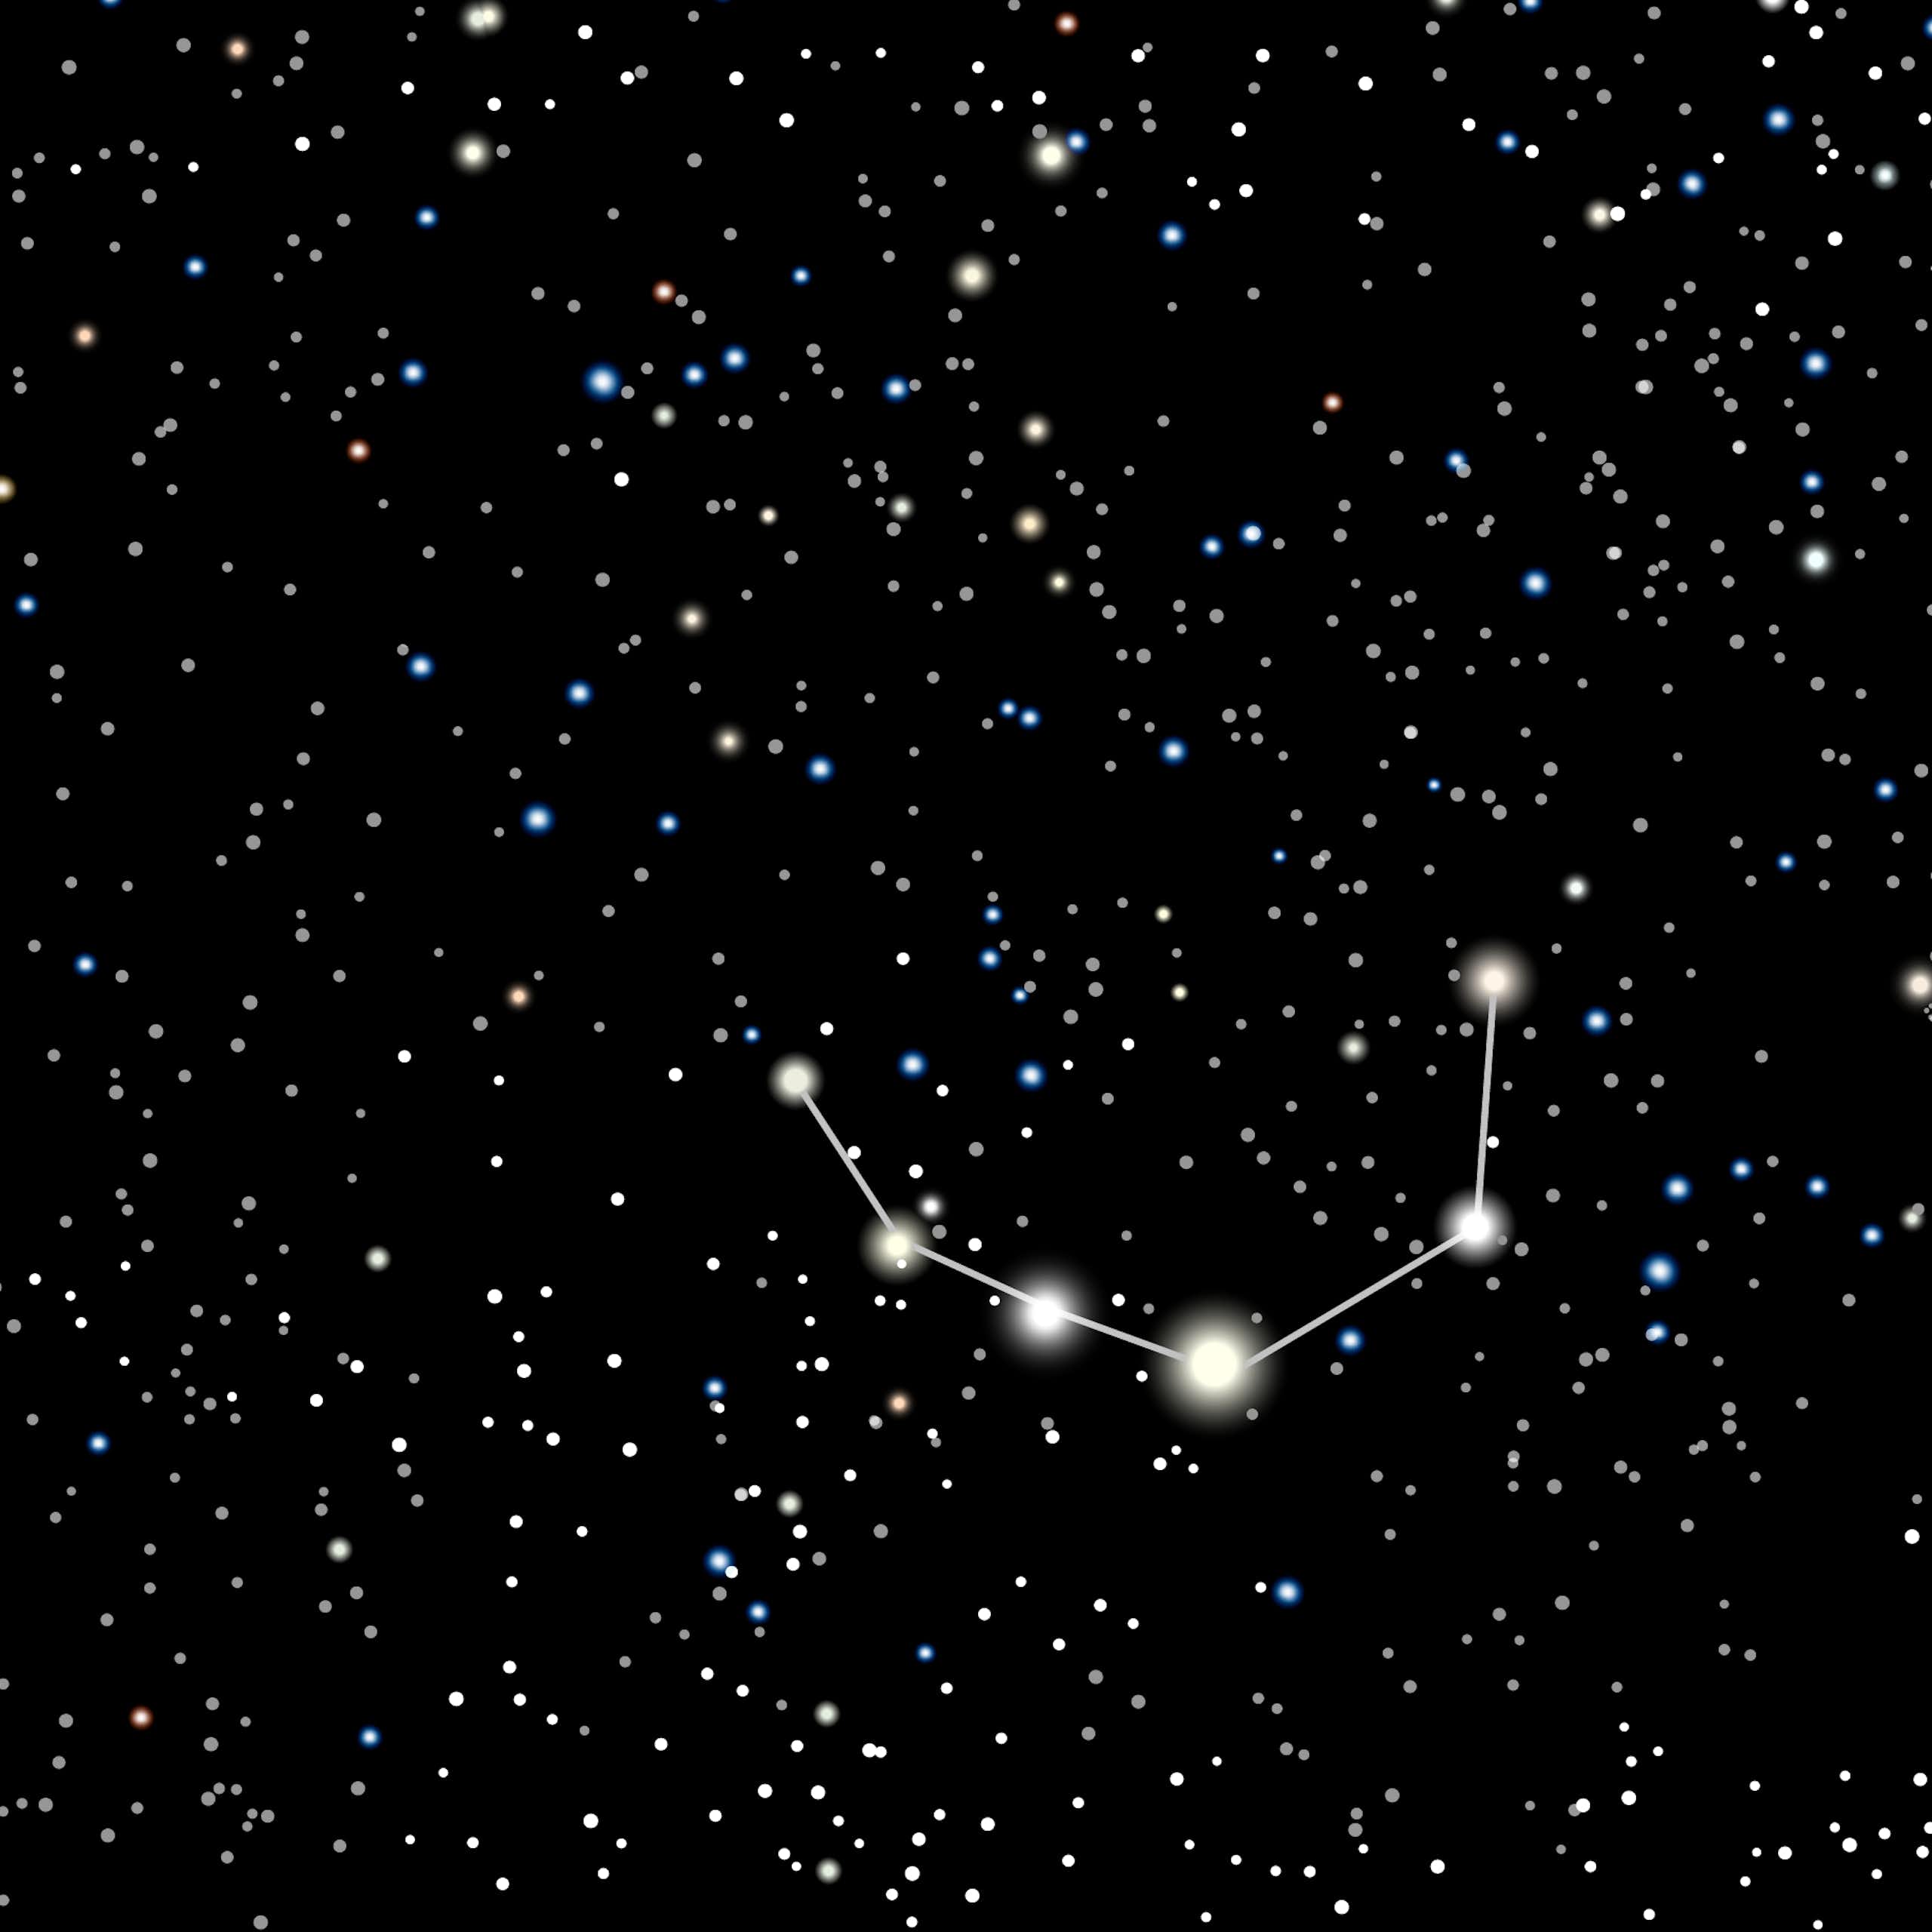 Inminente explosión estelar visible a simple vista